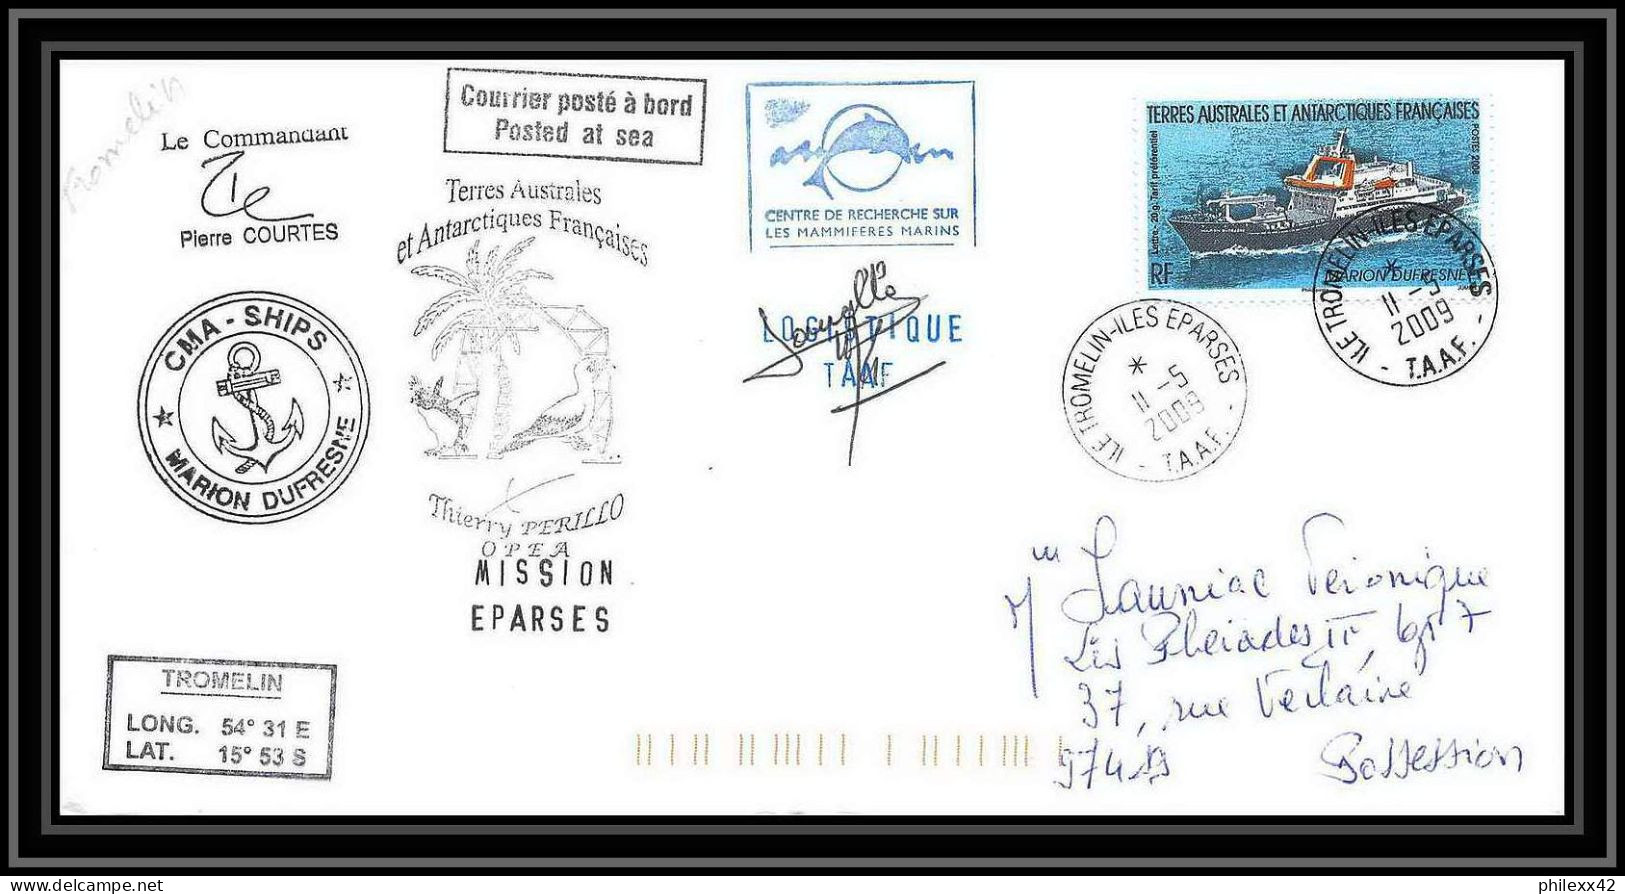 2912 Dufresne 2 Signé Signed Trommelin 11/5/2009 Mission Eparses N°520 ANTARCTIC Terres Australes (taaf) Lettre Cover - Storia Postale